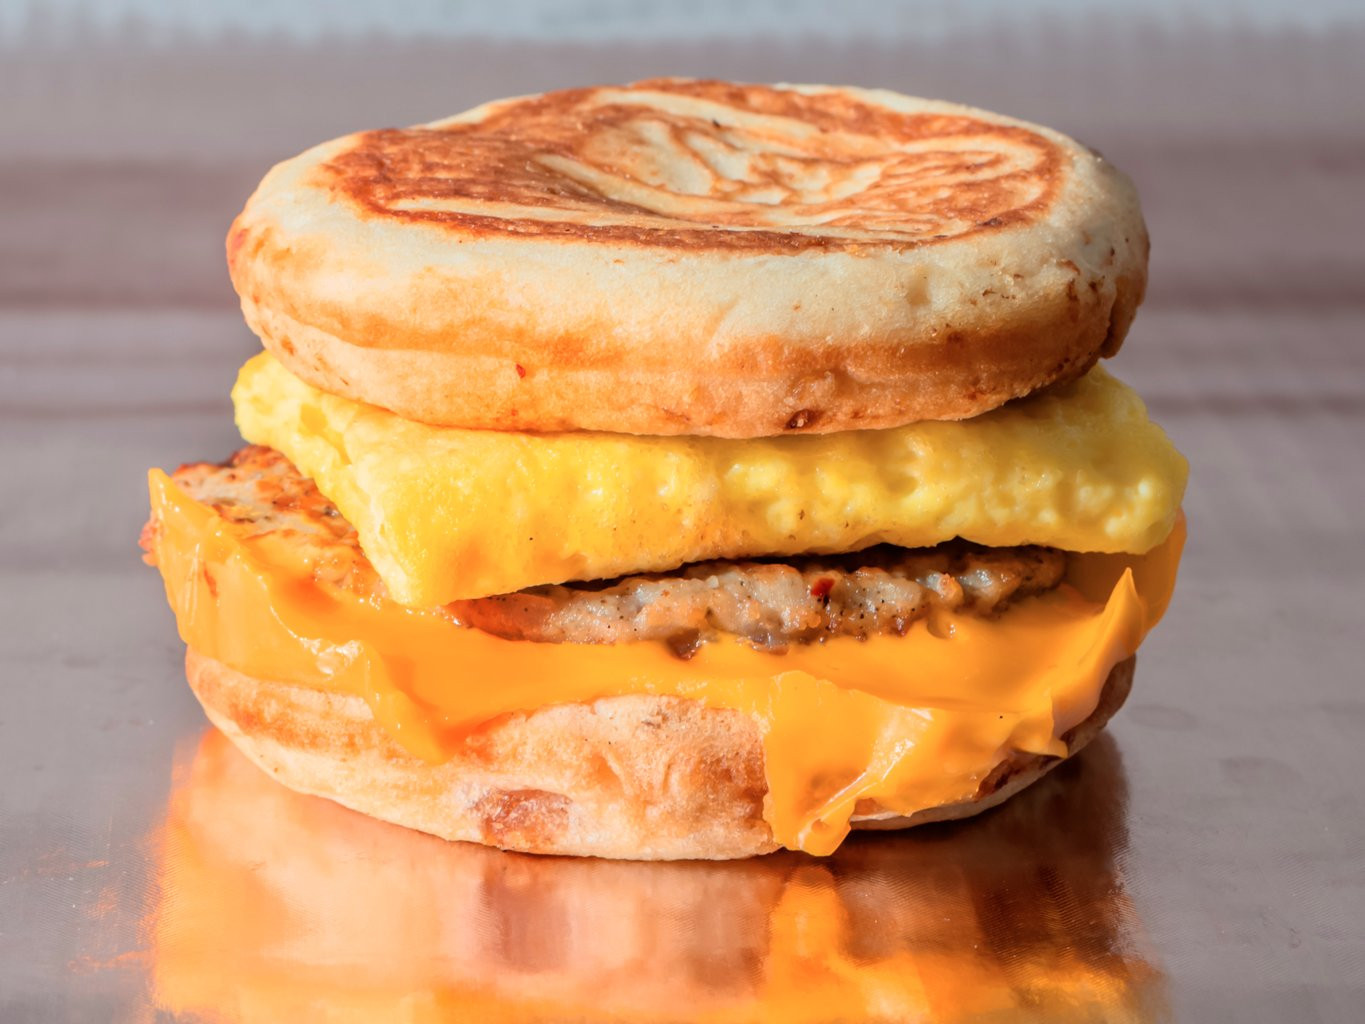 Healthy Mcdonalds Breakfast the Best Ideas for Healthy Breakfasts at Mcdonald S Panera Starbucks